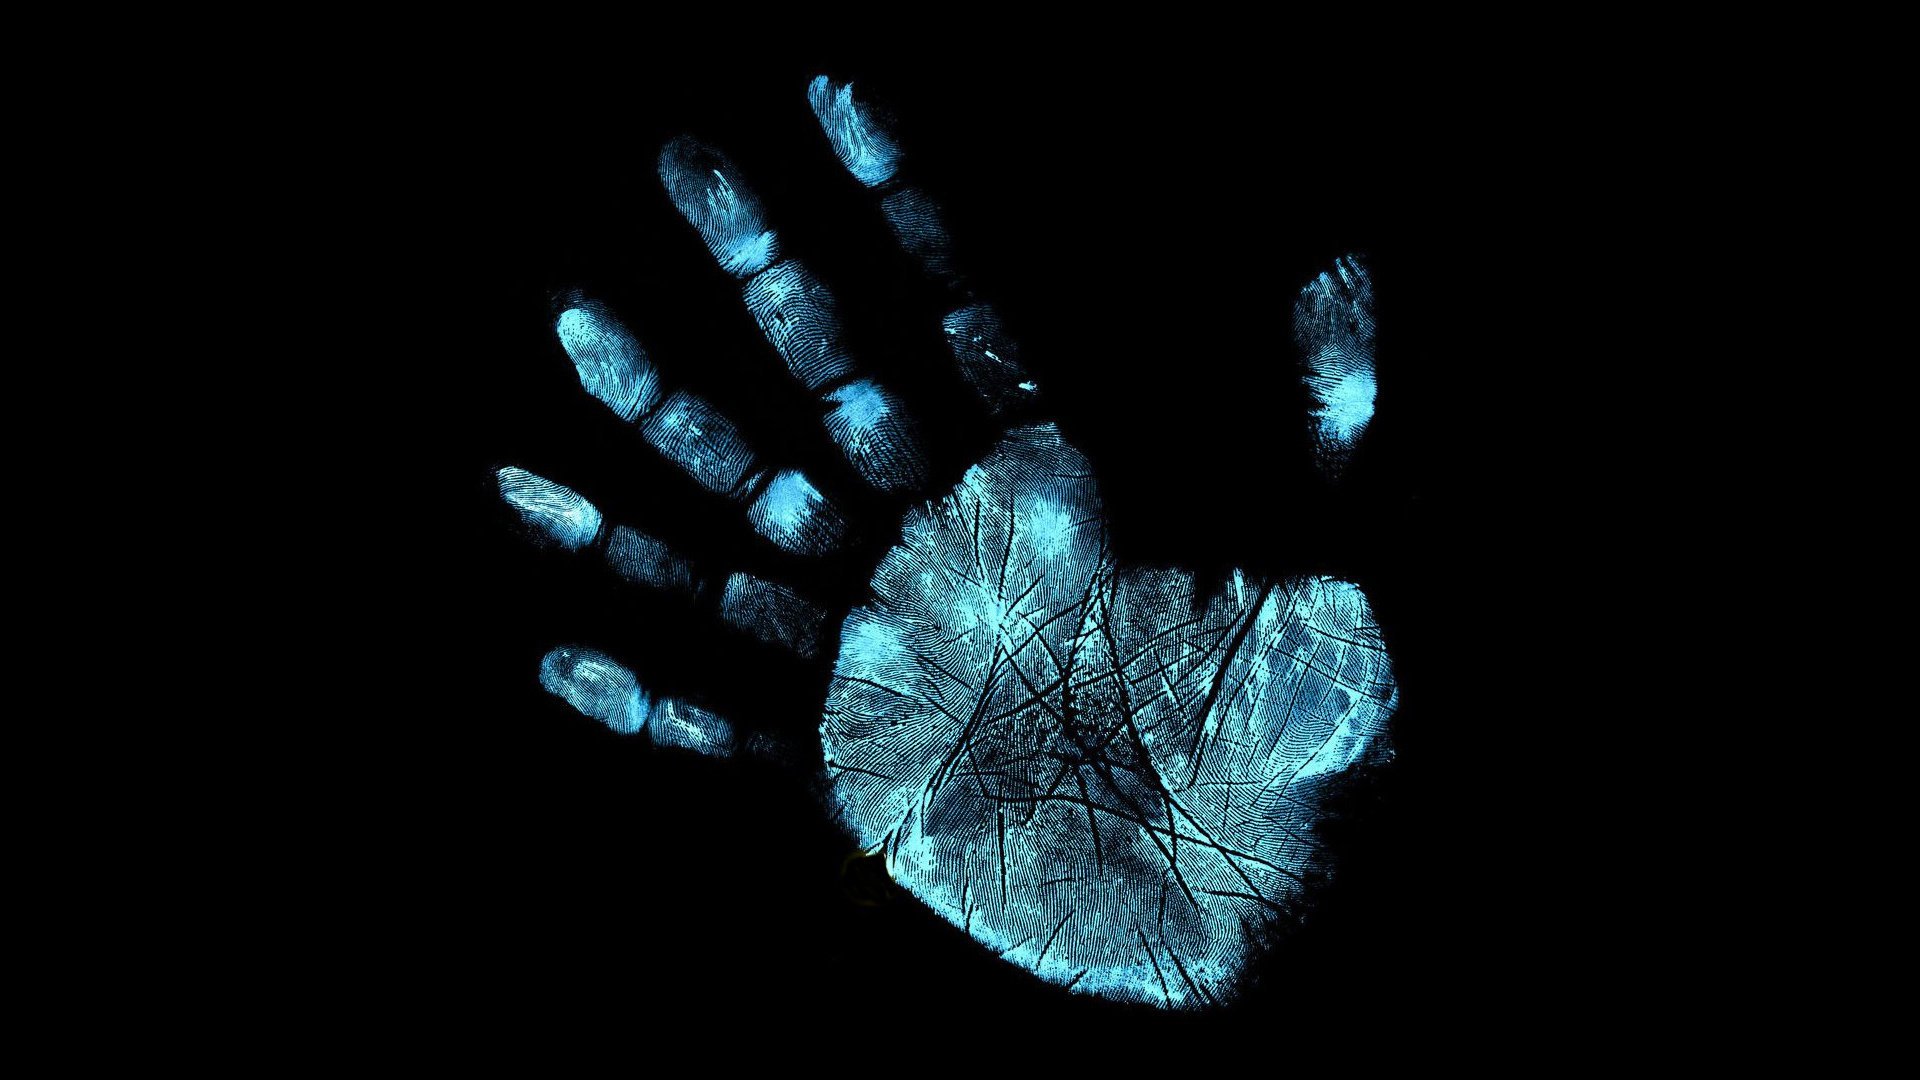 ix-fingered hand imprint hand neon background